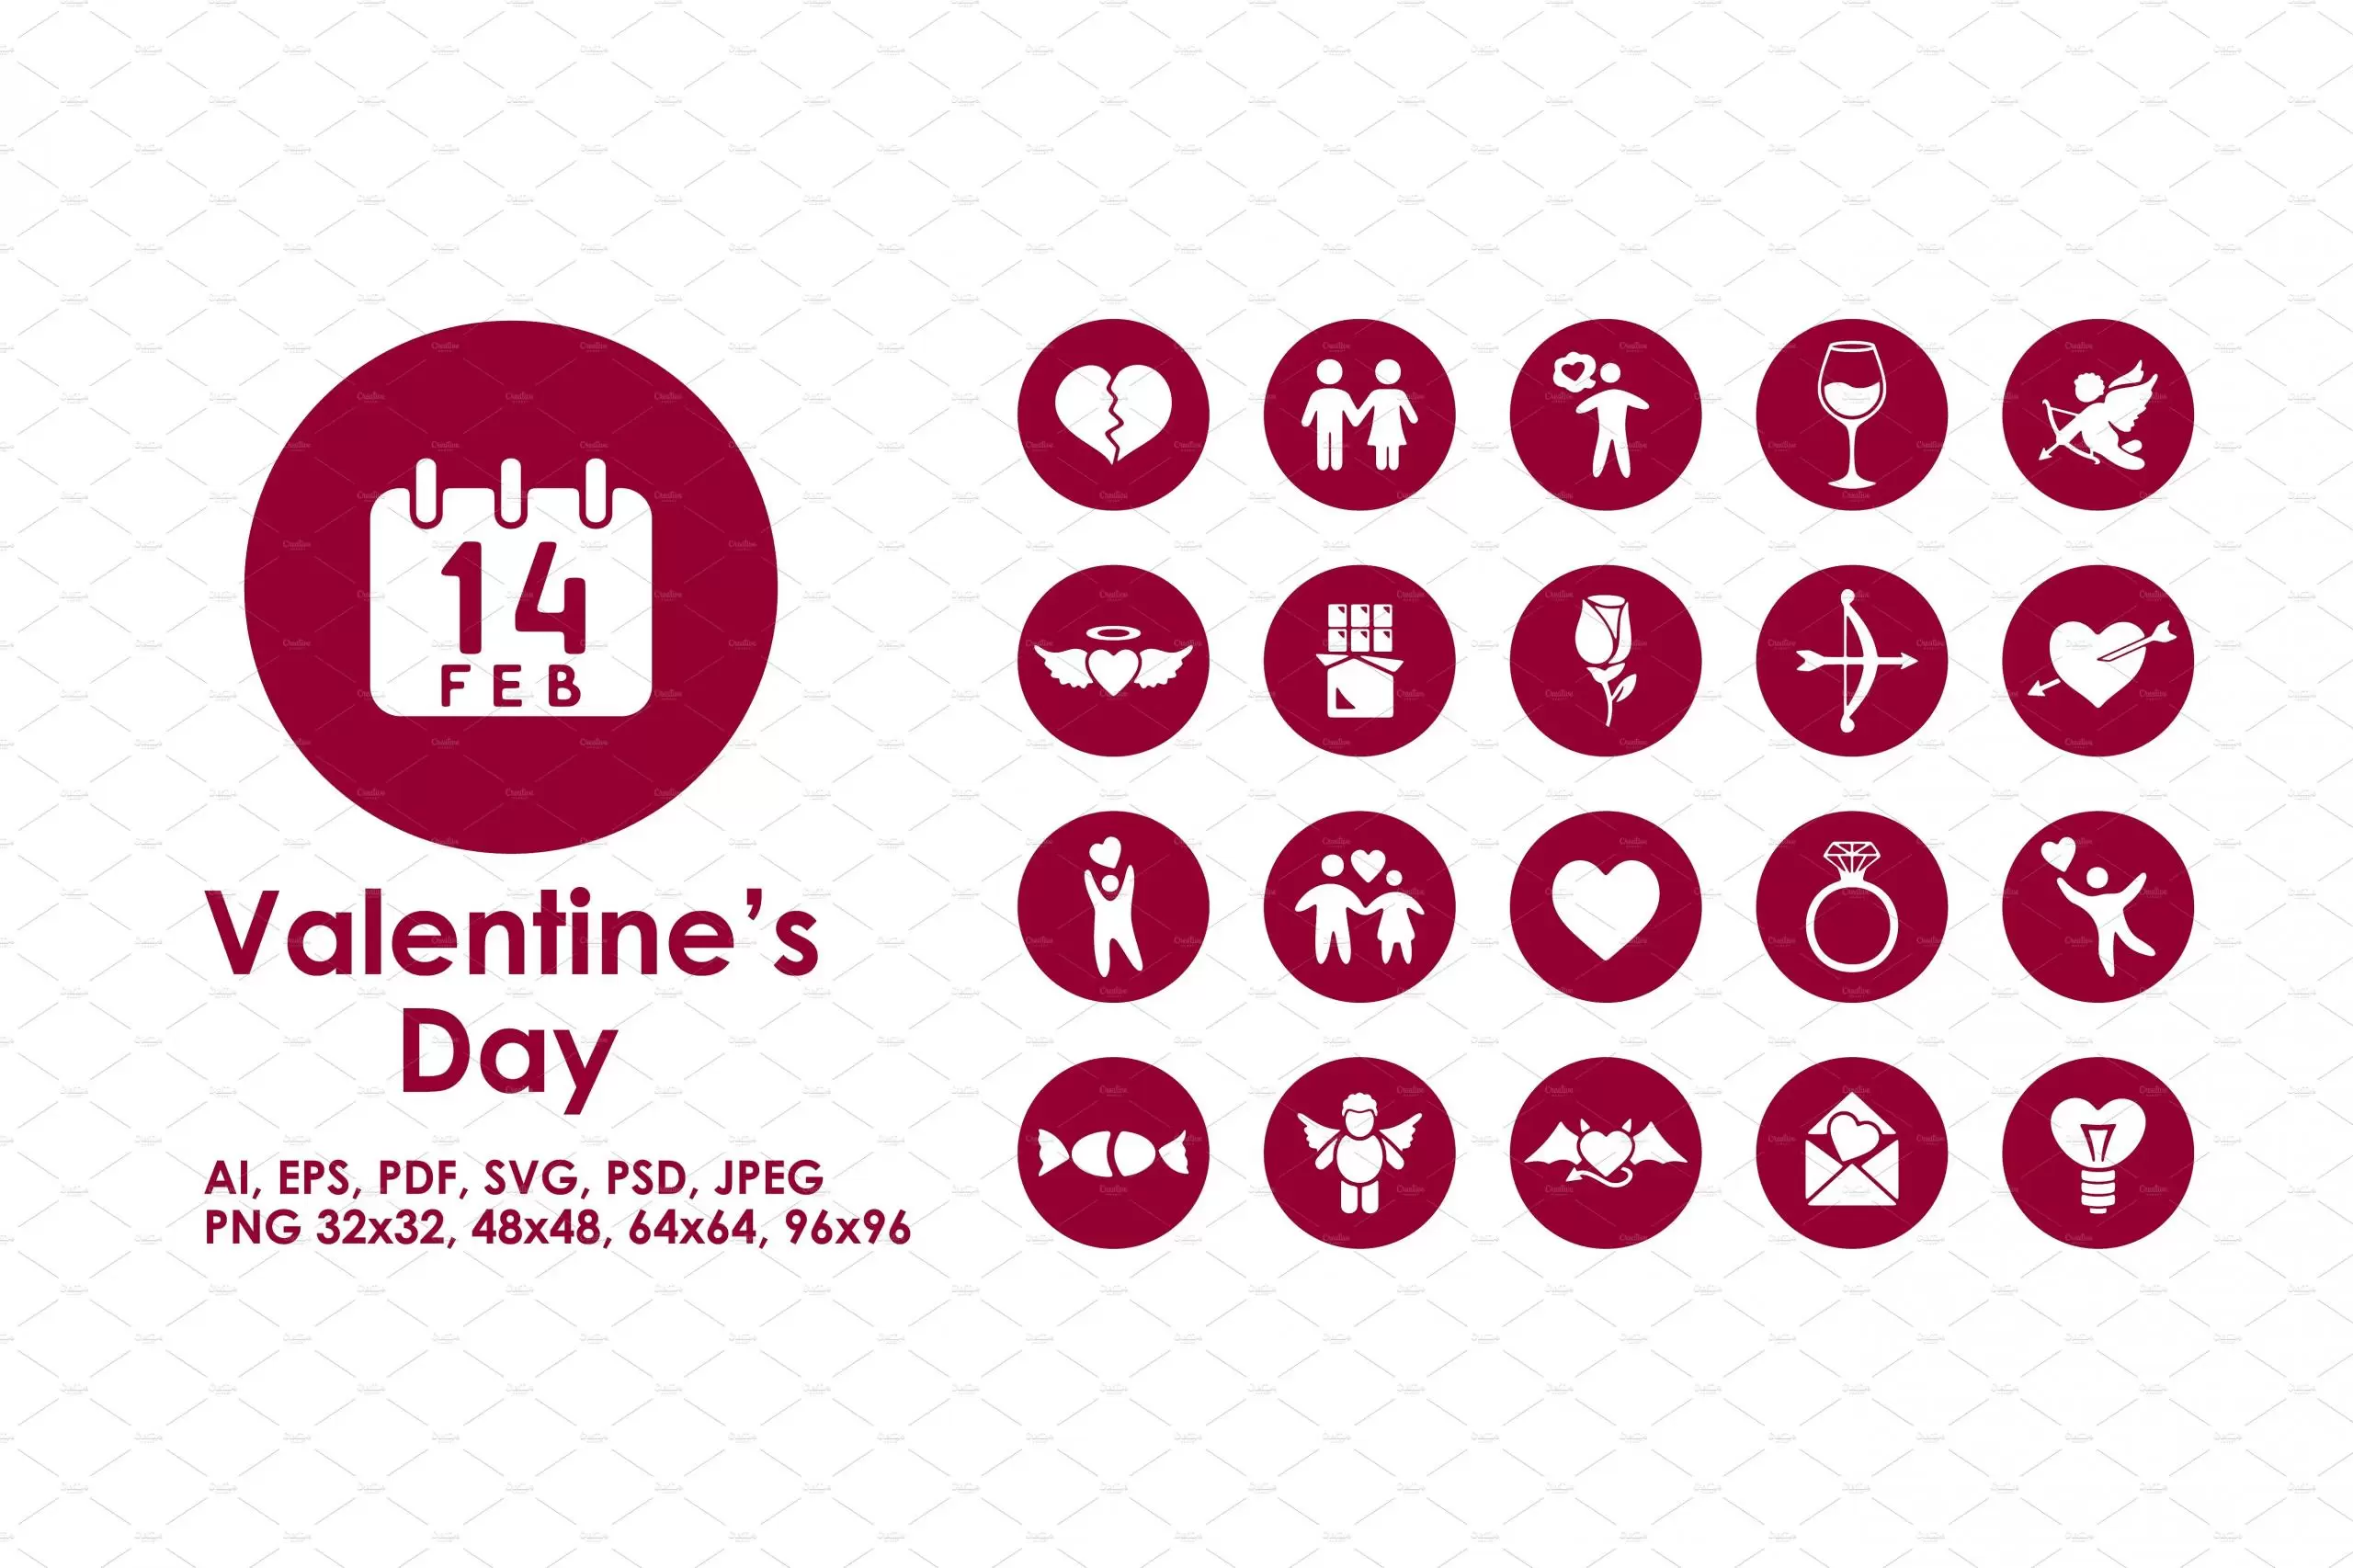 情人节图标素材 Valentine’s Day icons插图